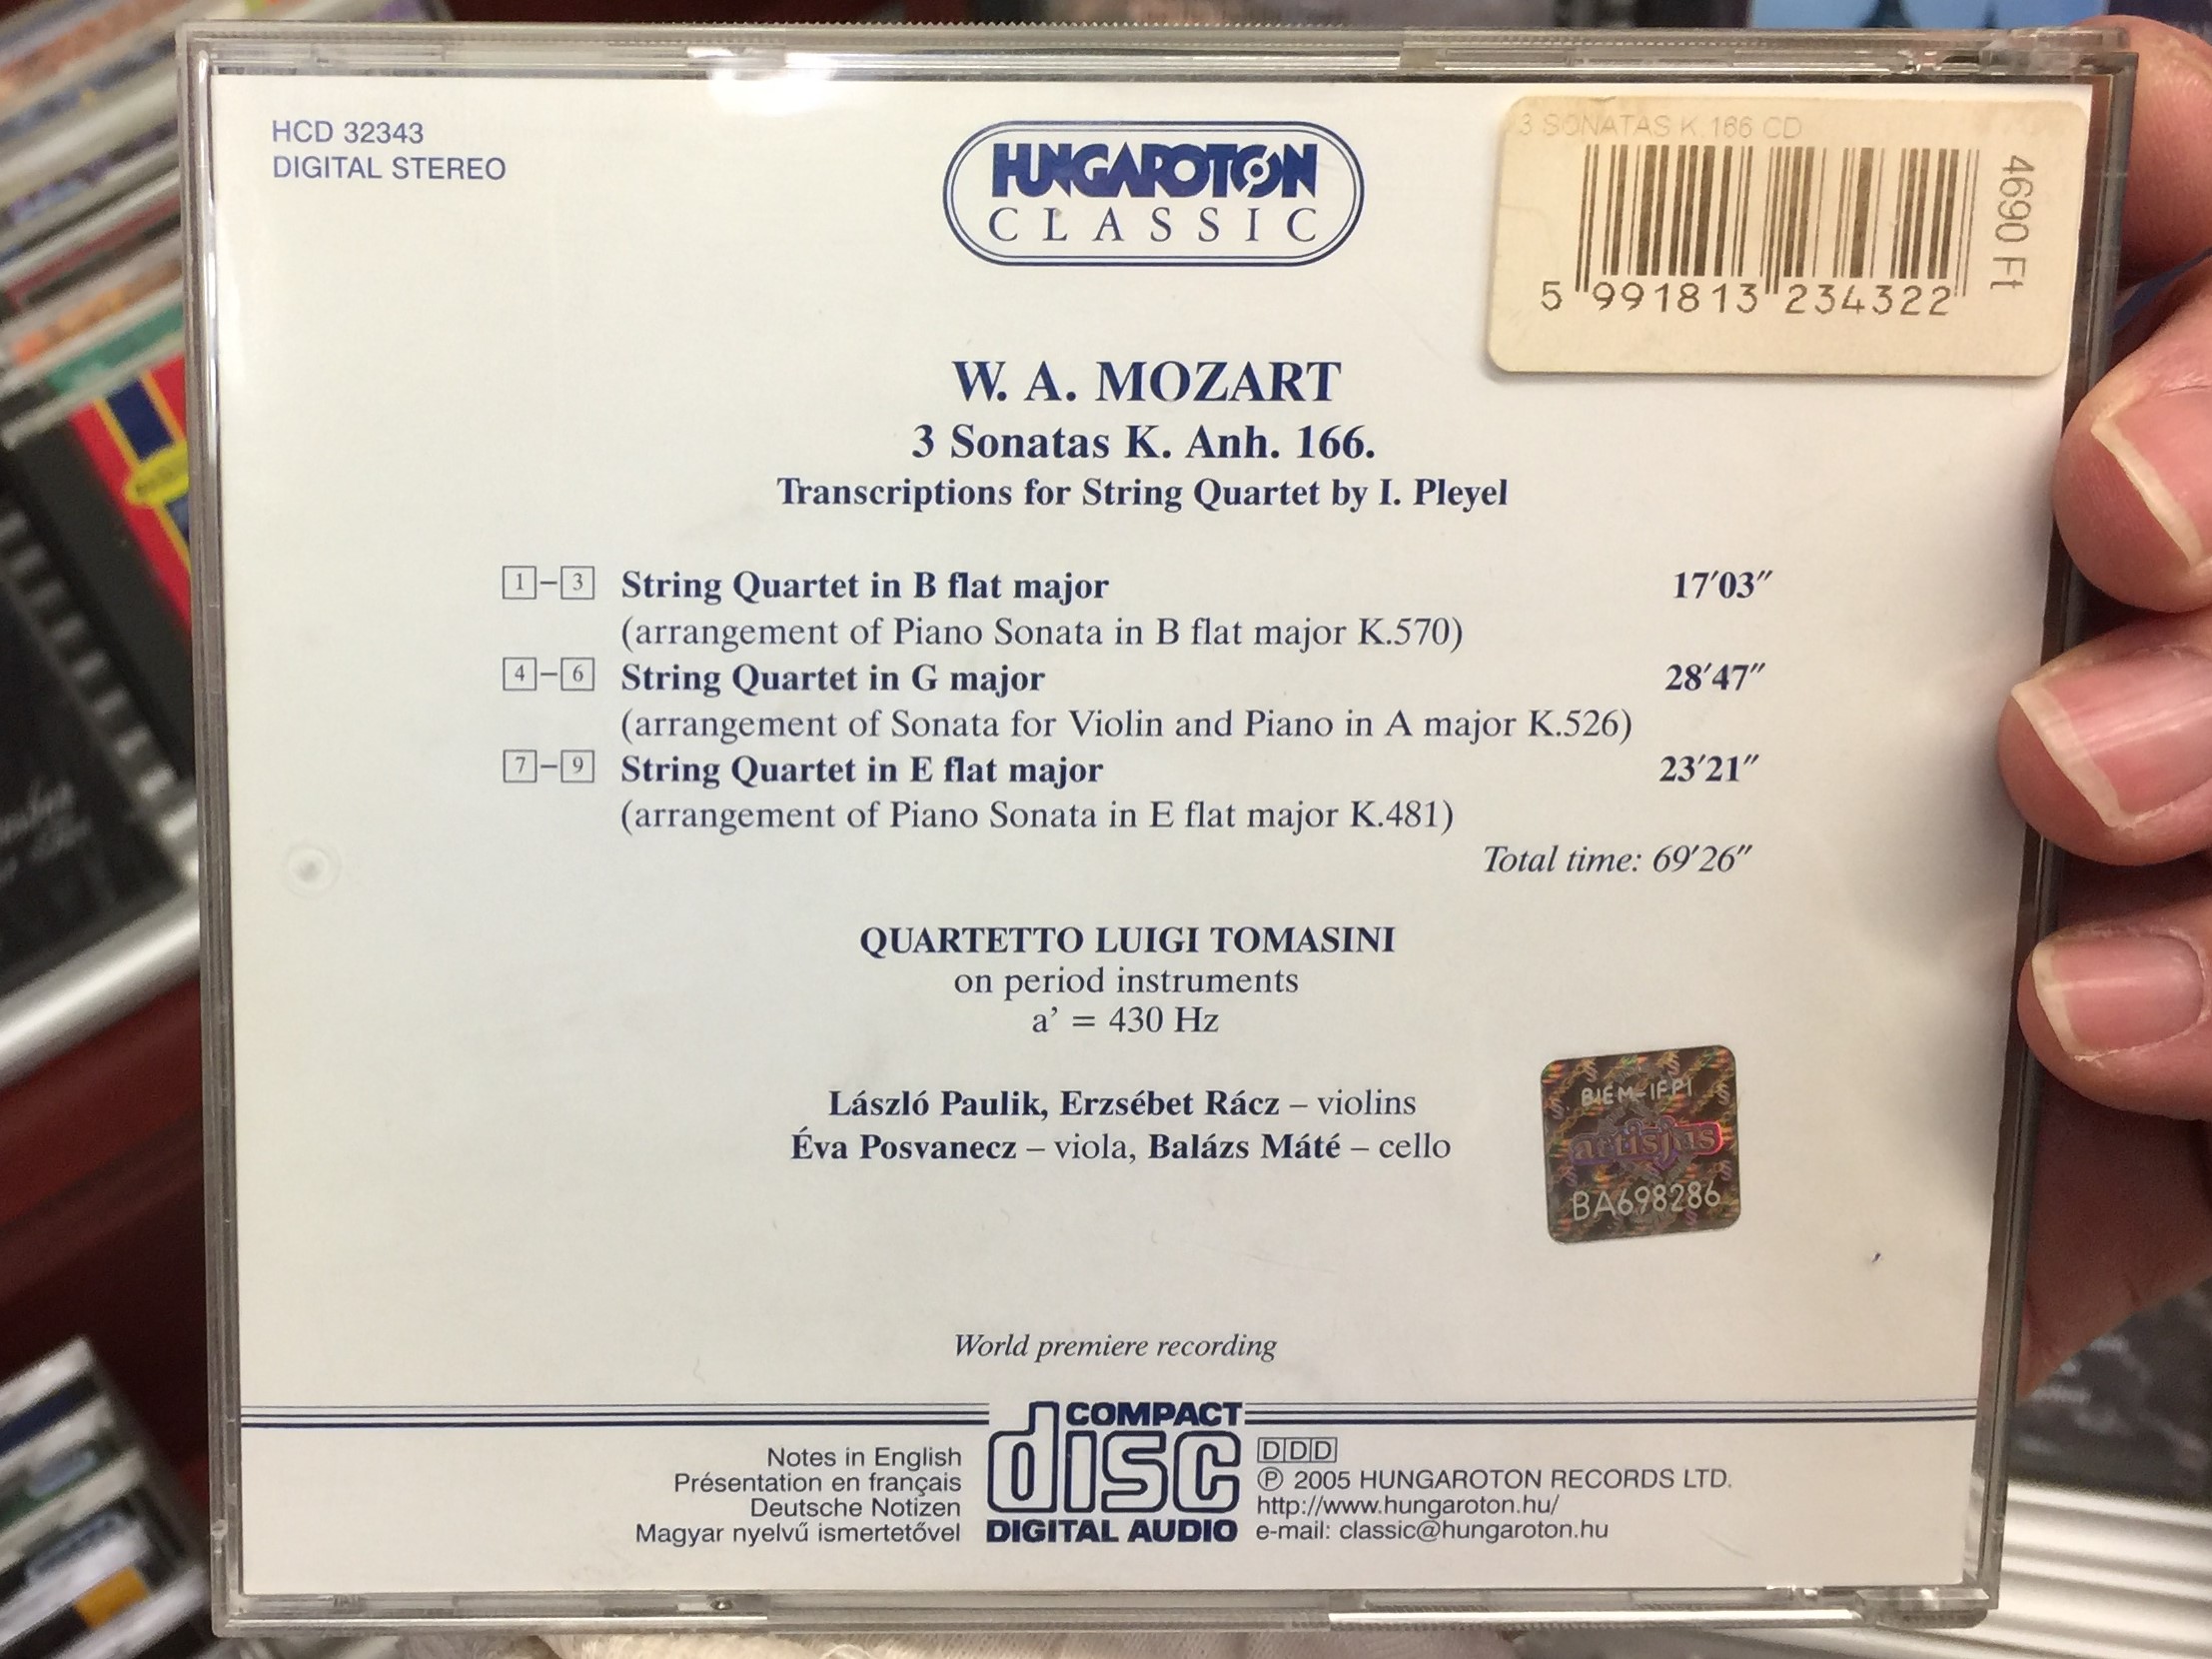 w.-a.-mozart-3-sonatas-k.-anh.-166.-transcriptions-for-string-quartet-by-i.-pleyel-quartetto-luigi-tomasini-on-period-instruments-hungaroton-classic-audio-cd-2005-stereo-hcd-32343-2-.jpg